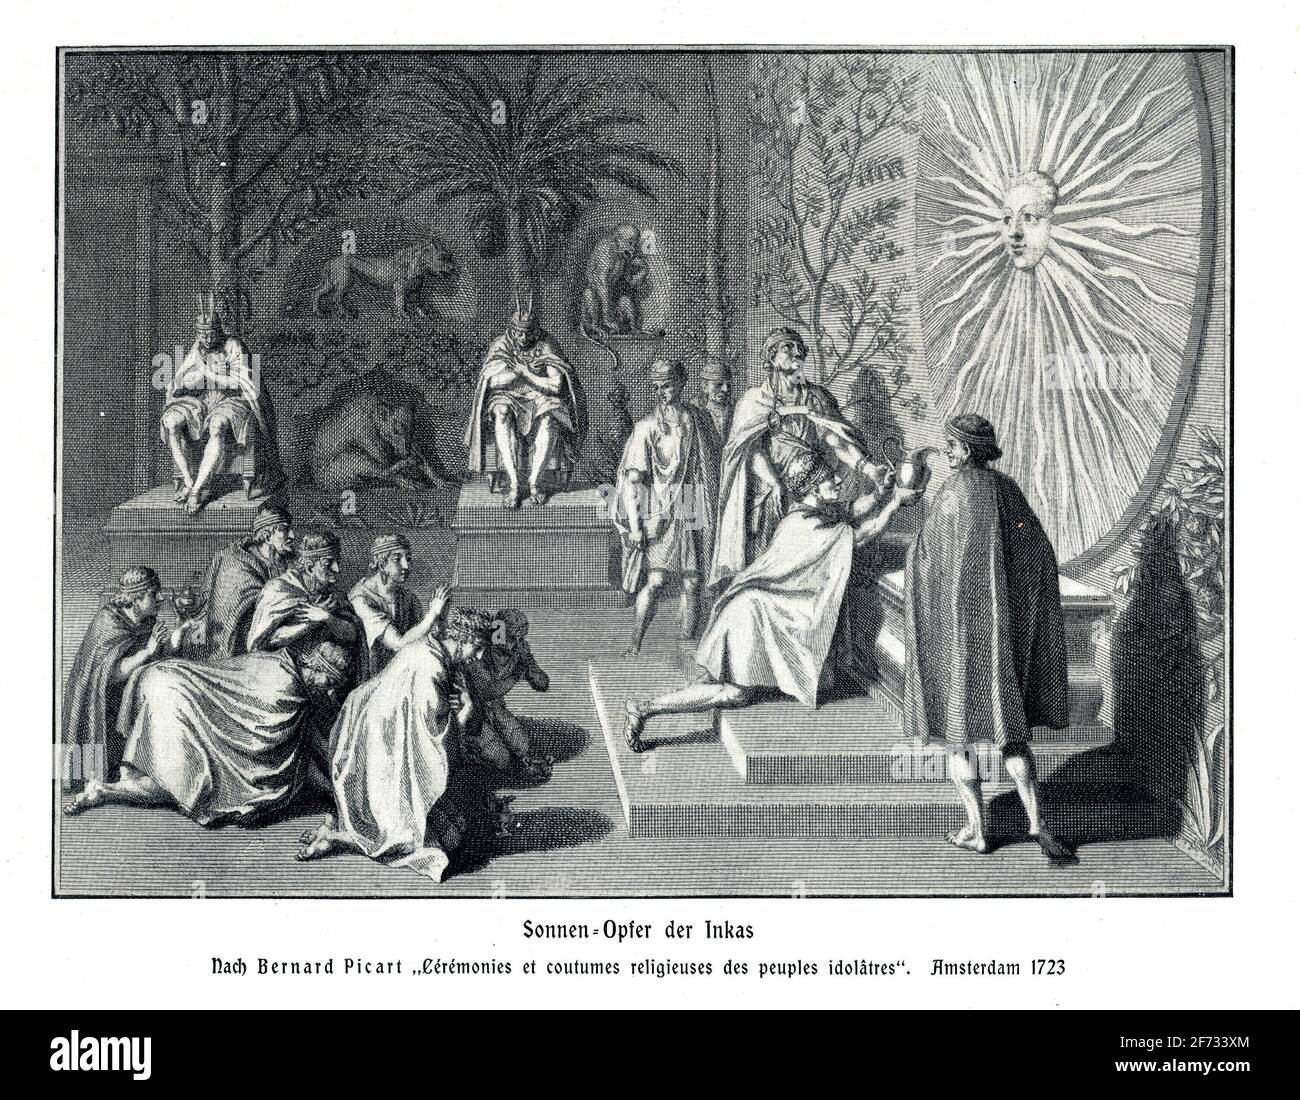 Sonenopfer der Inkas, dopo Bernrd Bicart Ceremonie et coutumes religieuses des peuples idolatres dal 1723 Foto Stock